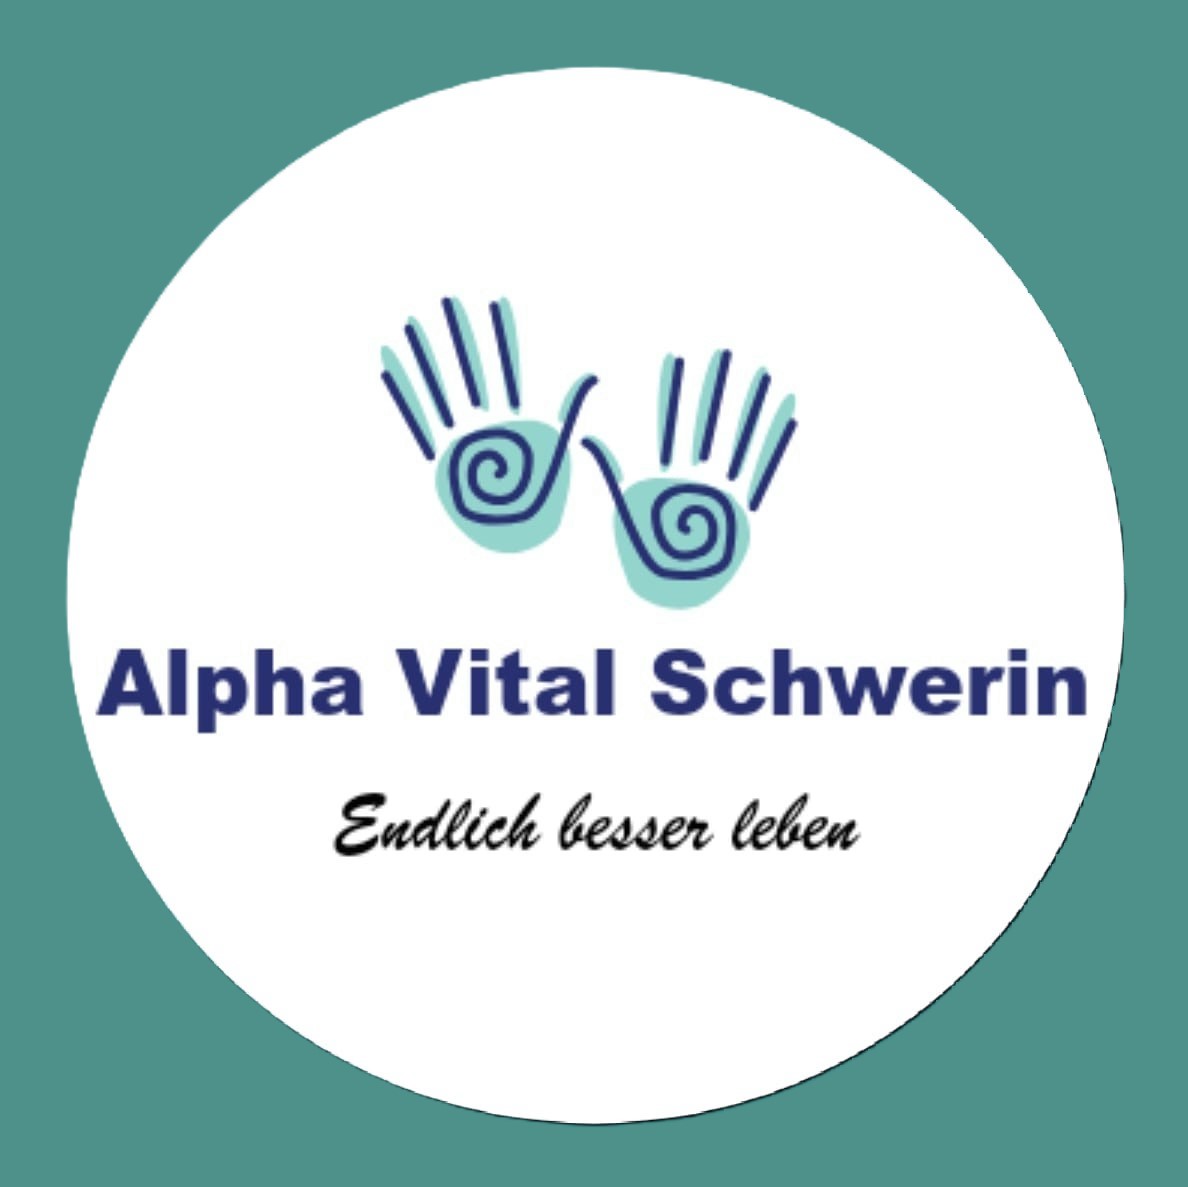 Alpha Vital Schwerin